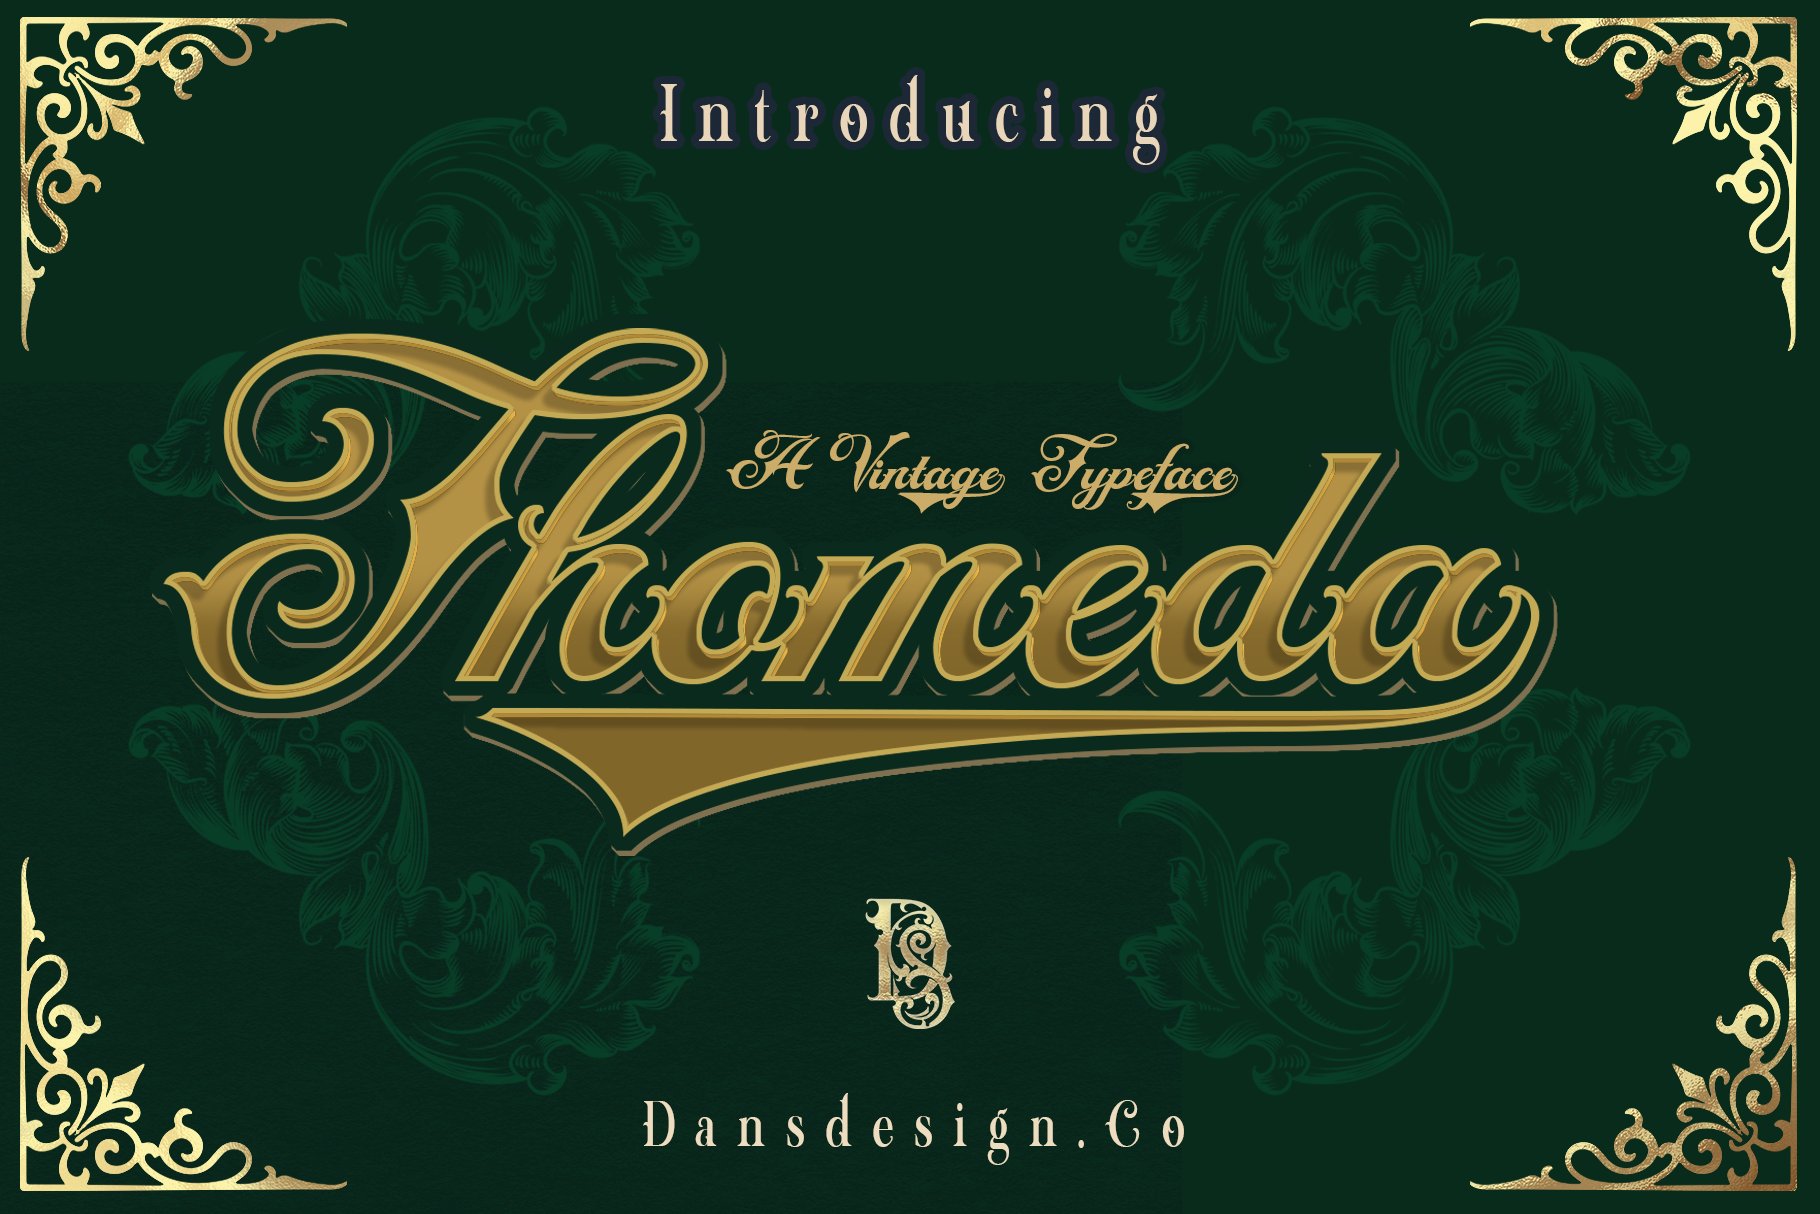 Thomeda cover image.